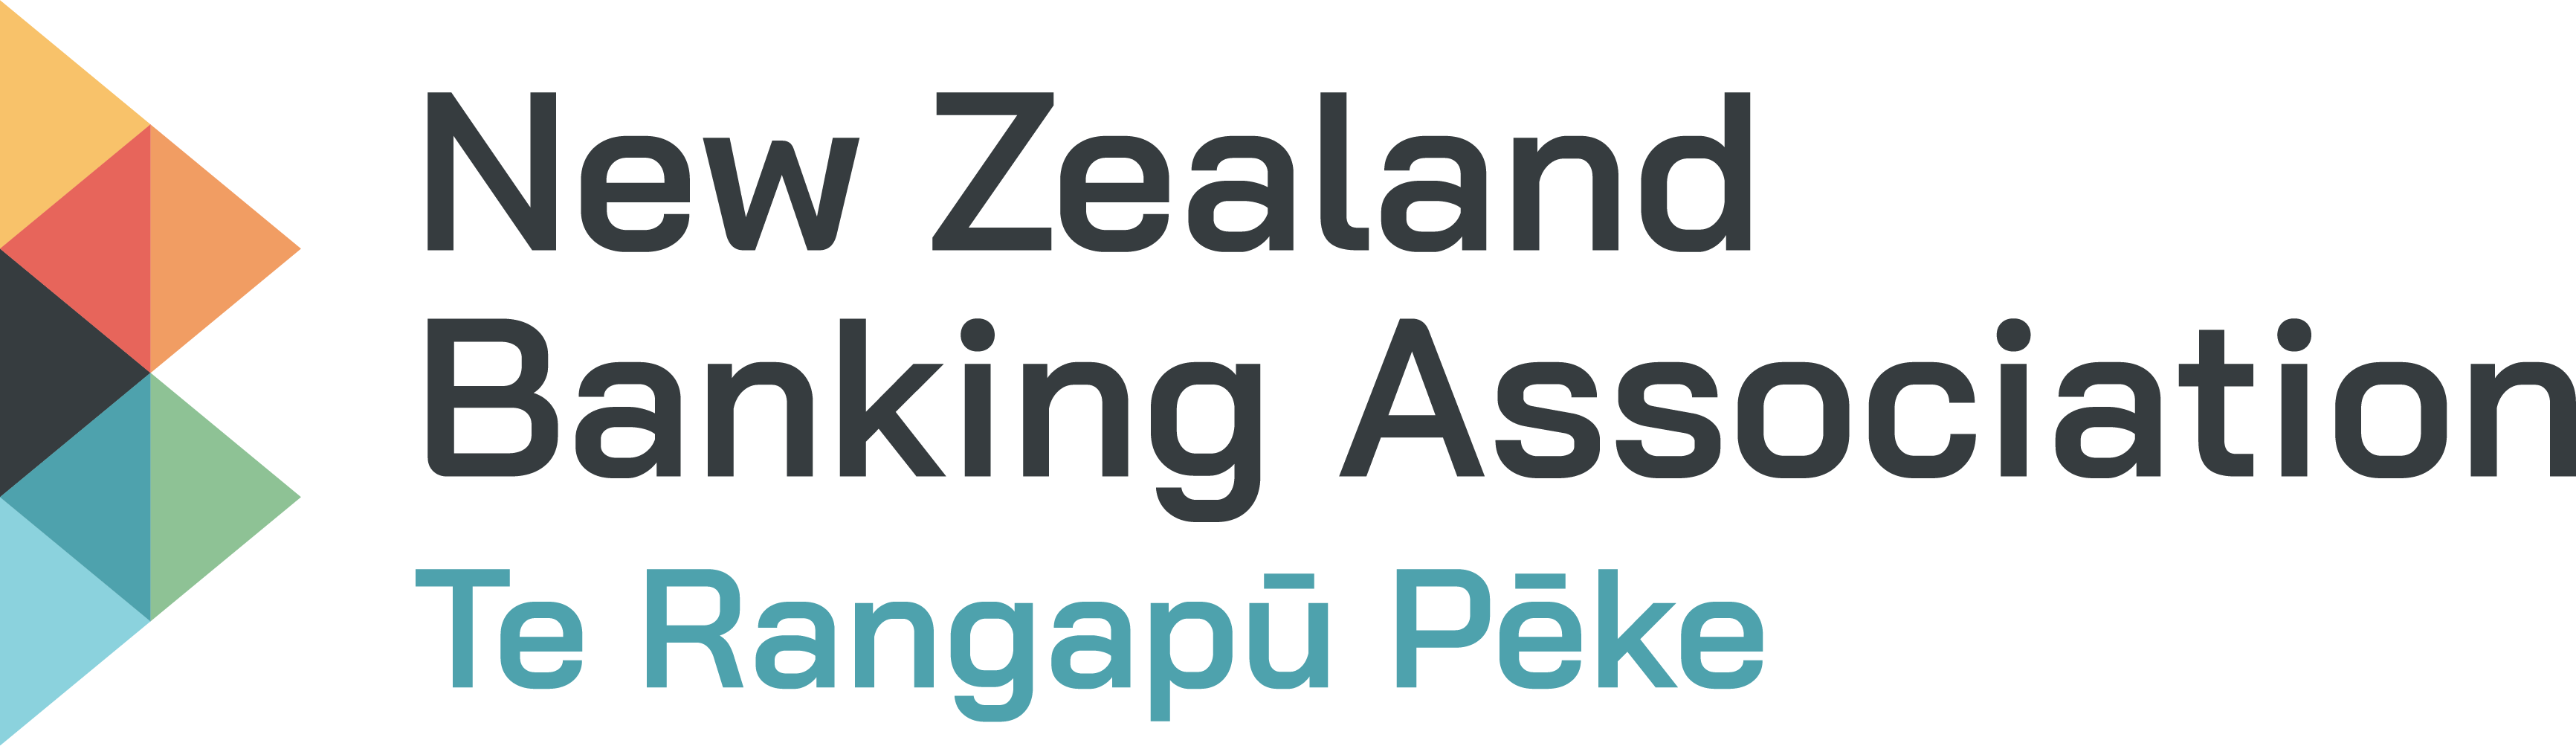 New Zealand Banker's Association